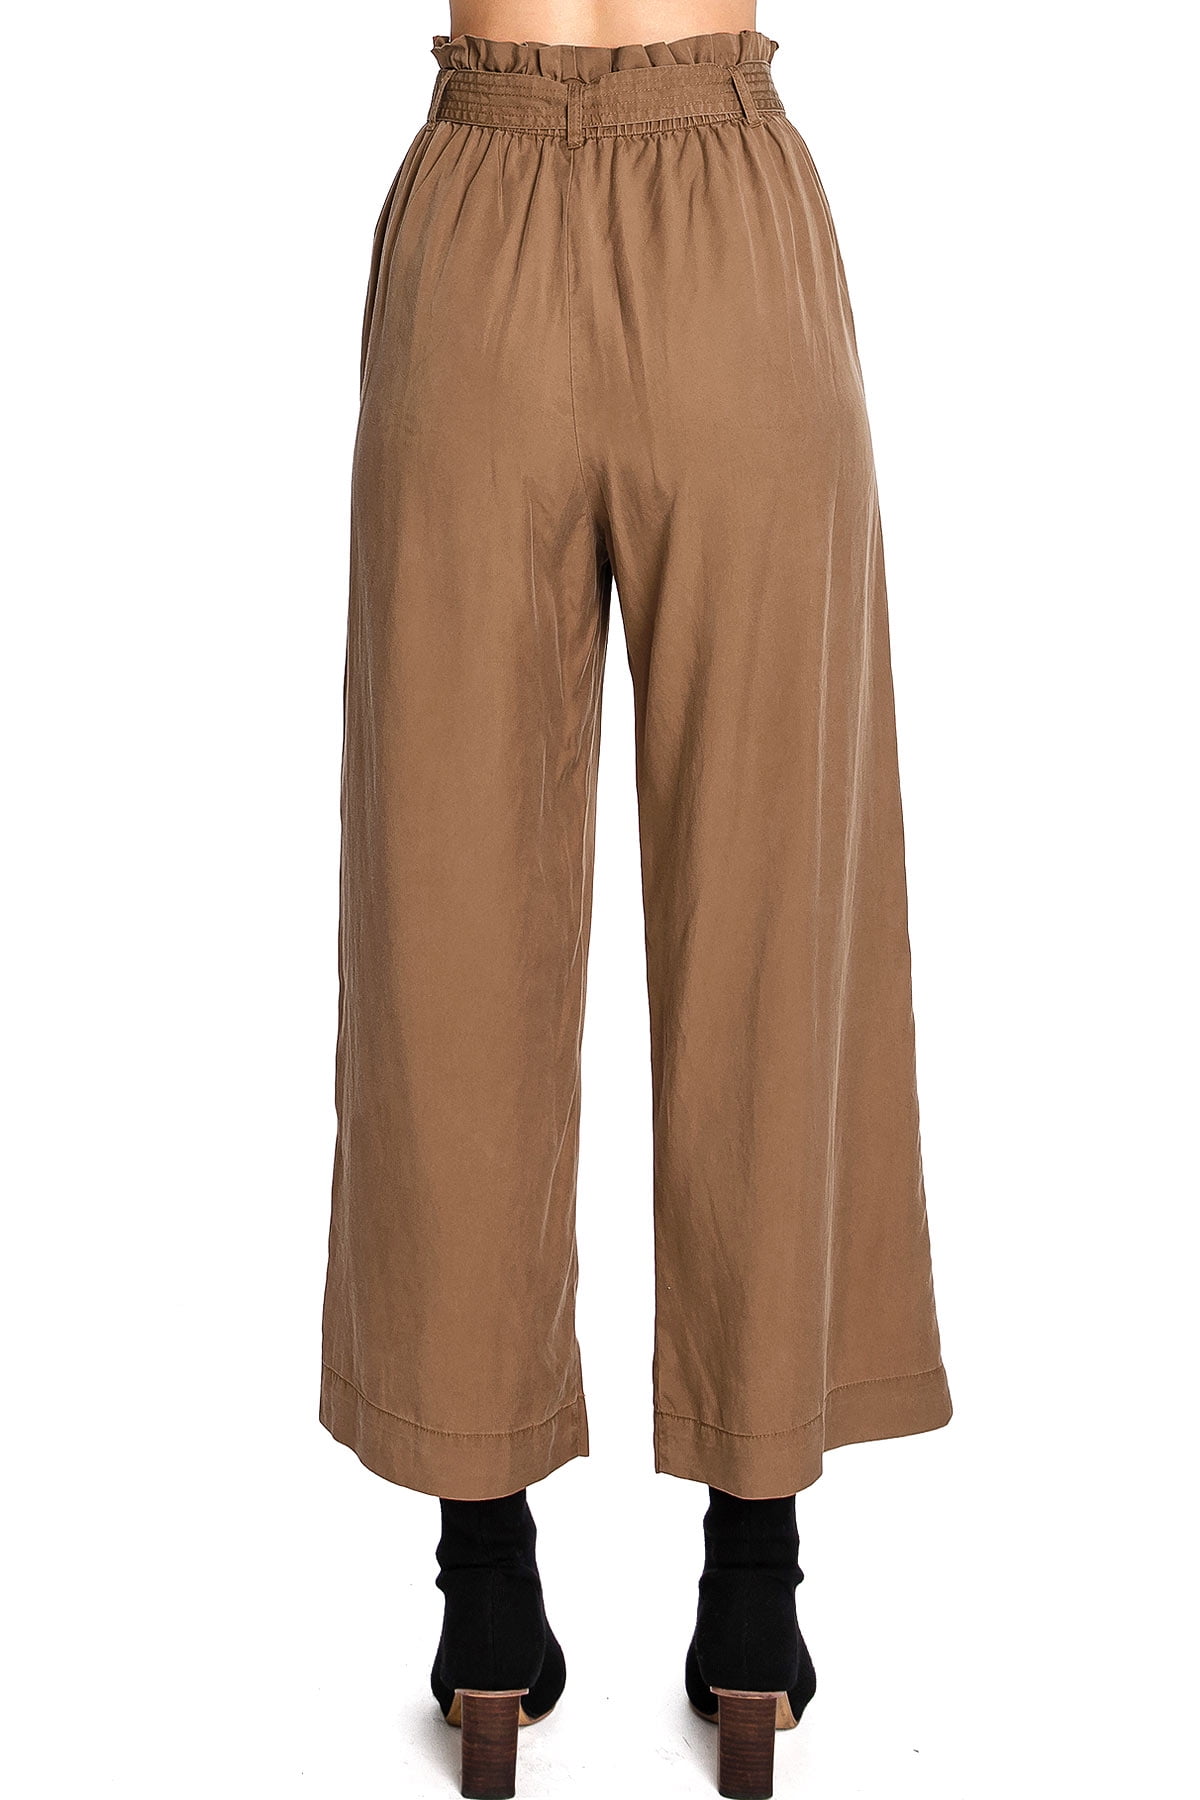 KANCY KOLE Women Paper Bag Pants High Waist with Pockets Tie Casual Cropped  Trou